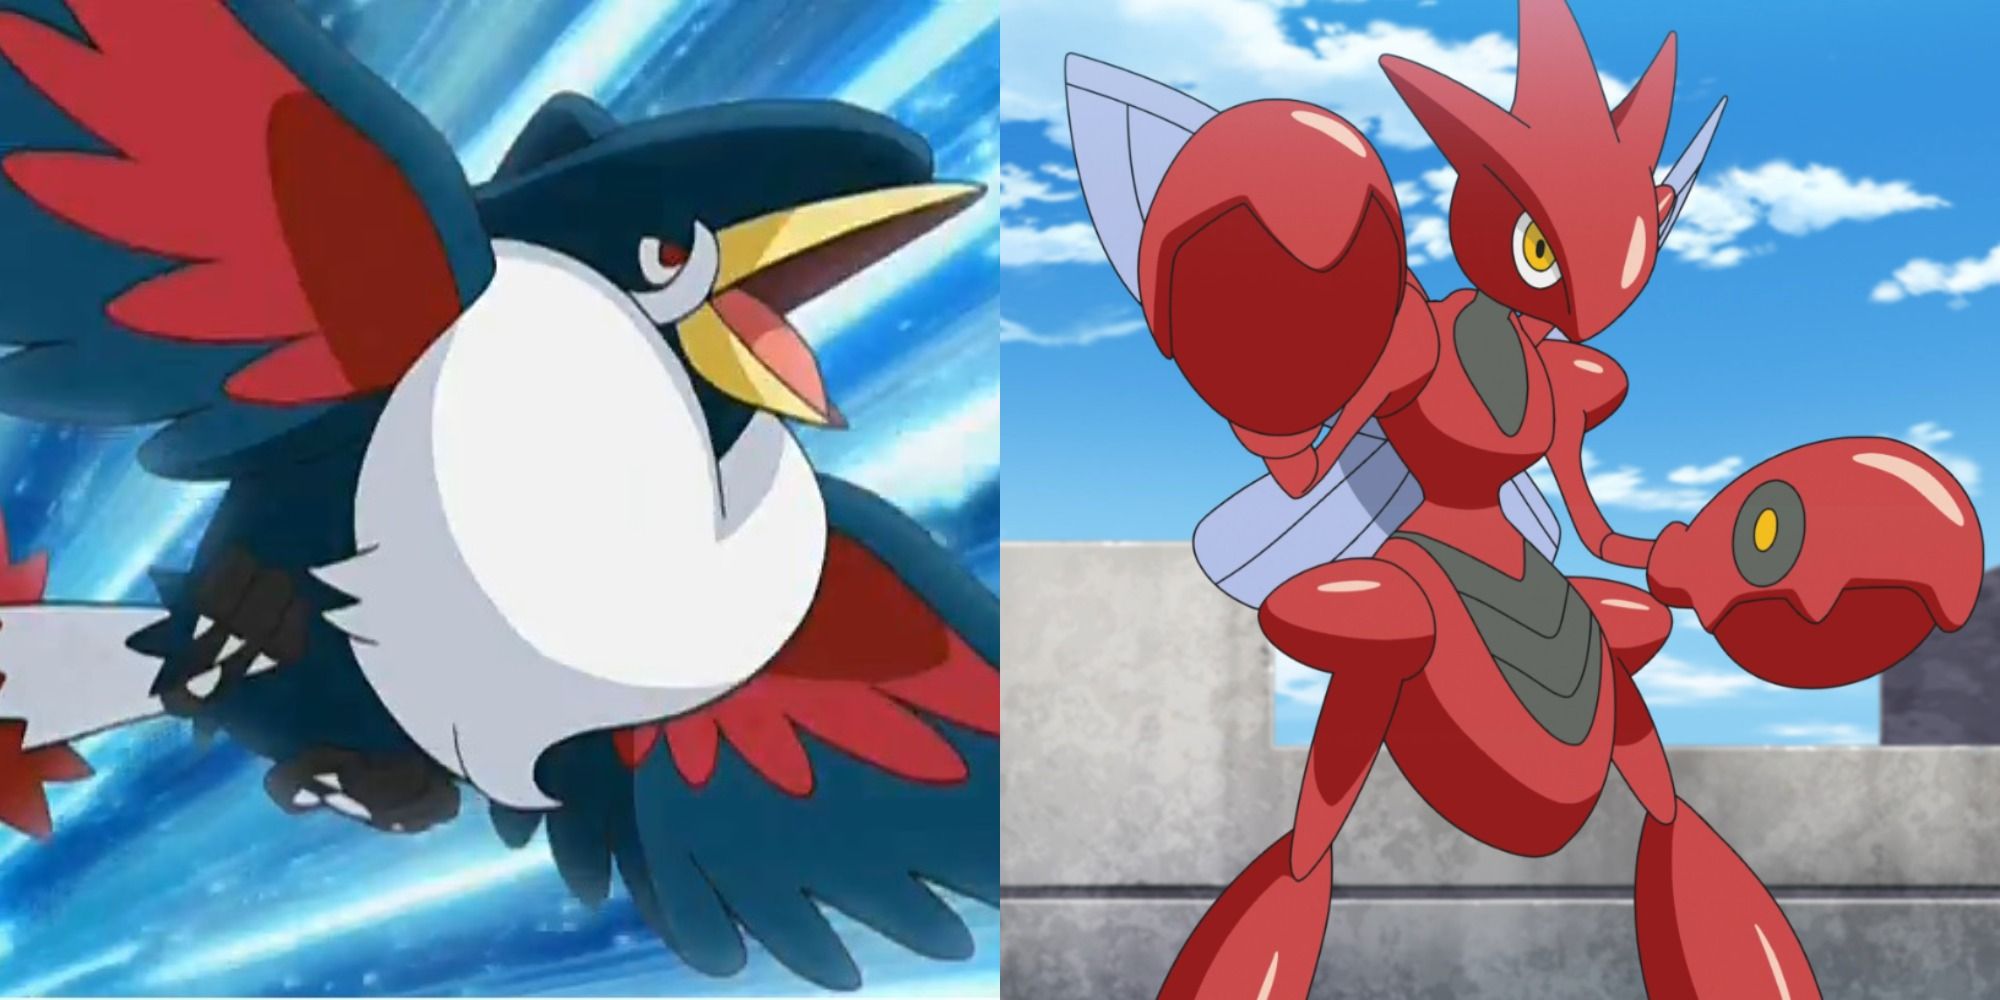 Split image showing Honchkrow and Scizor in the Pokémon anime